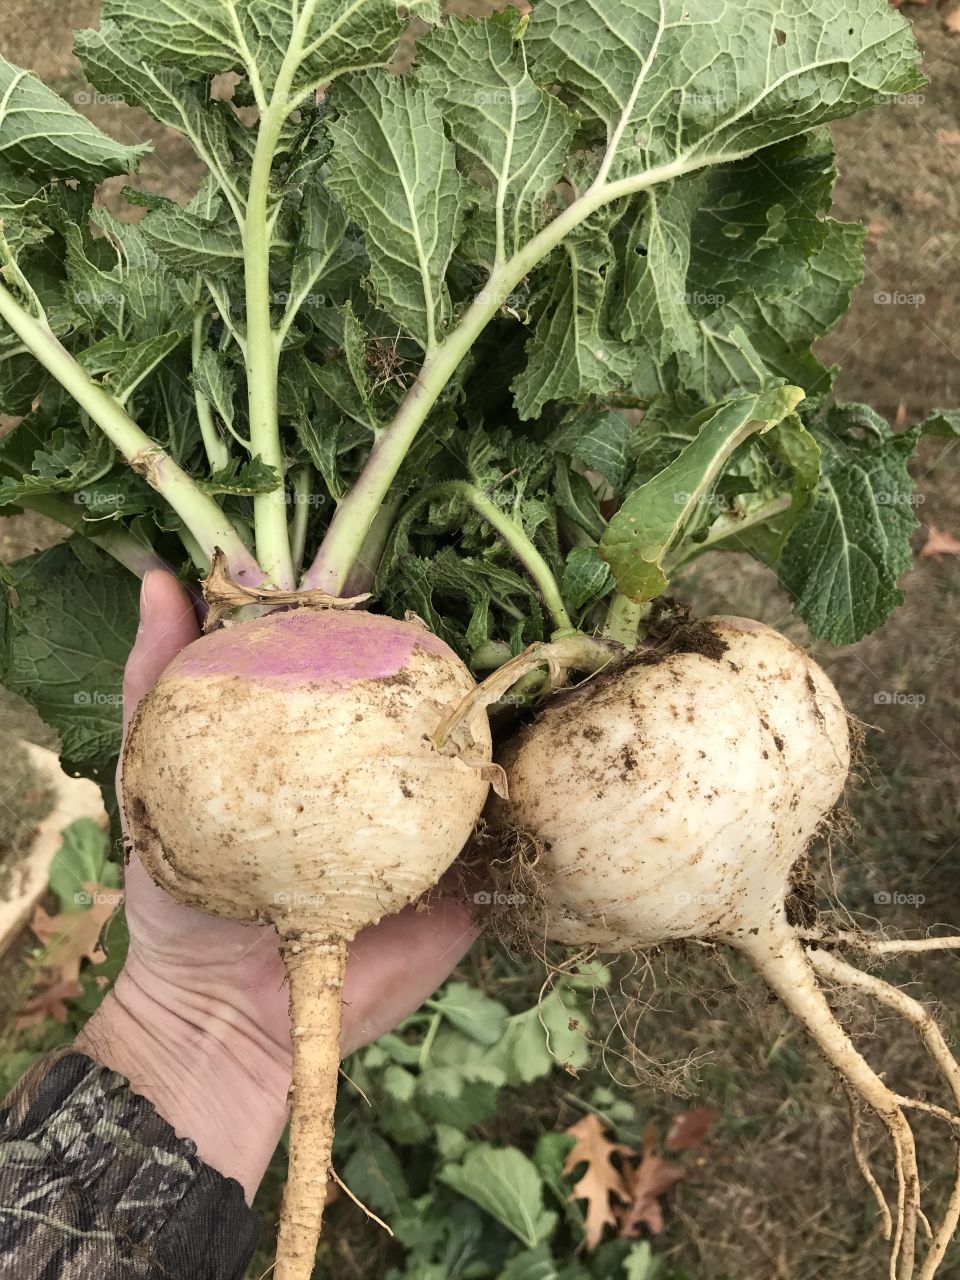 Purple top turnips 
